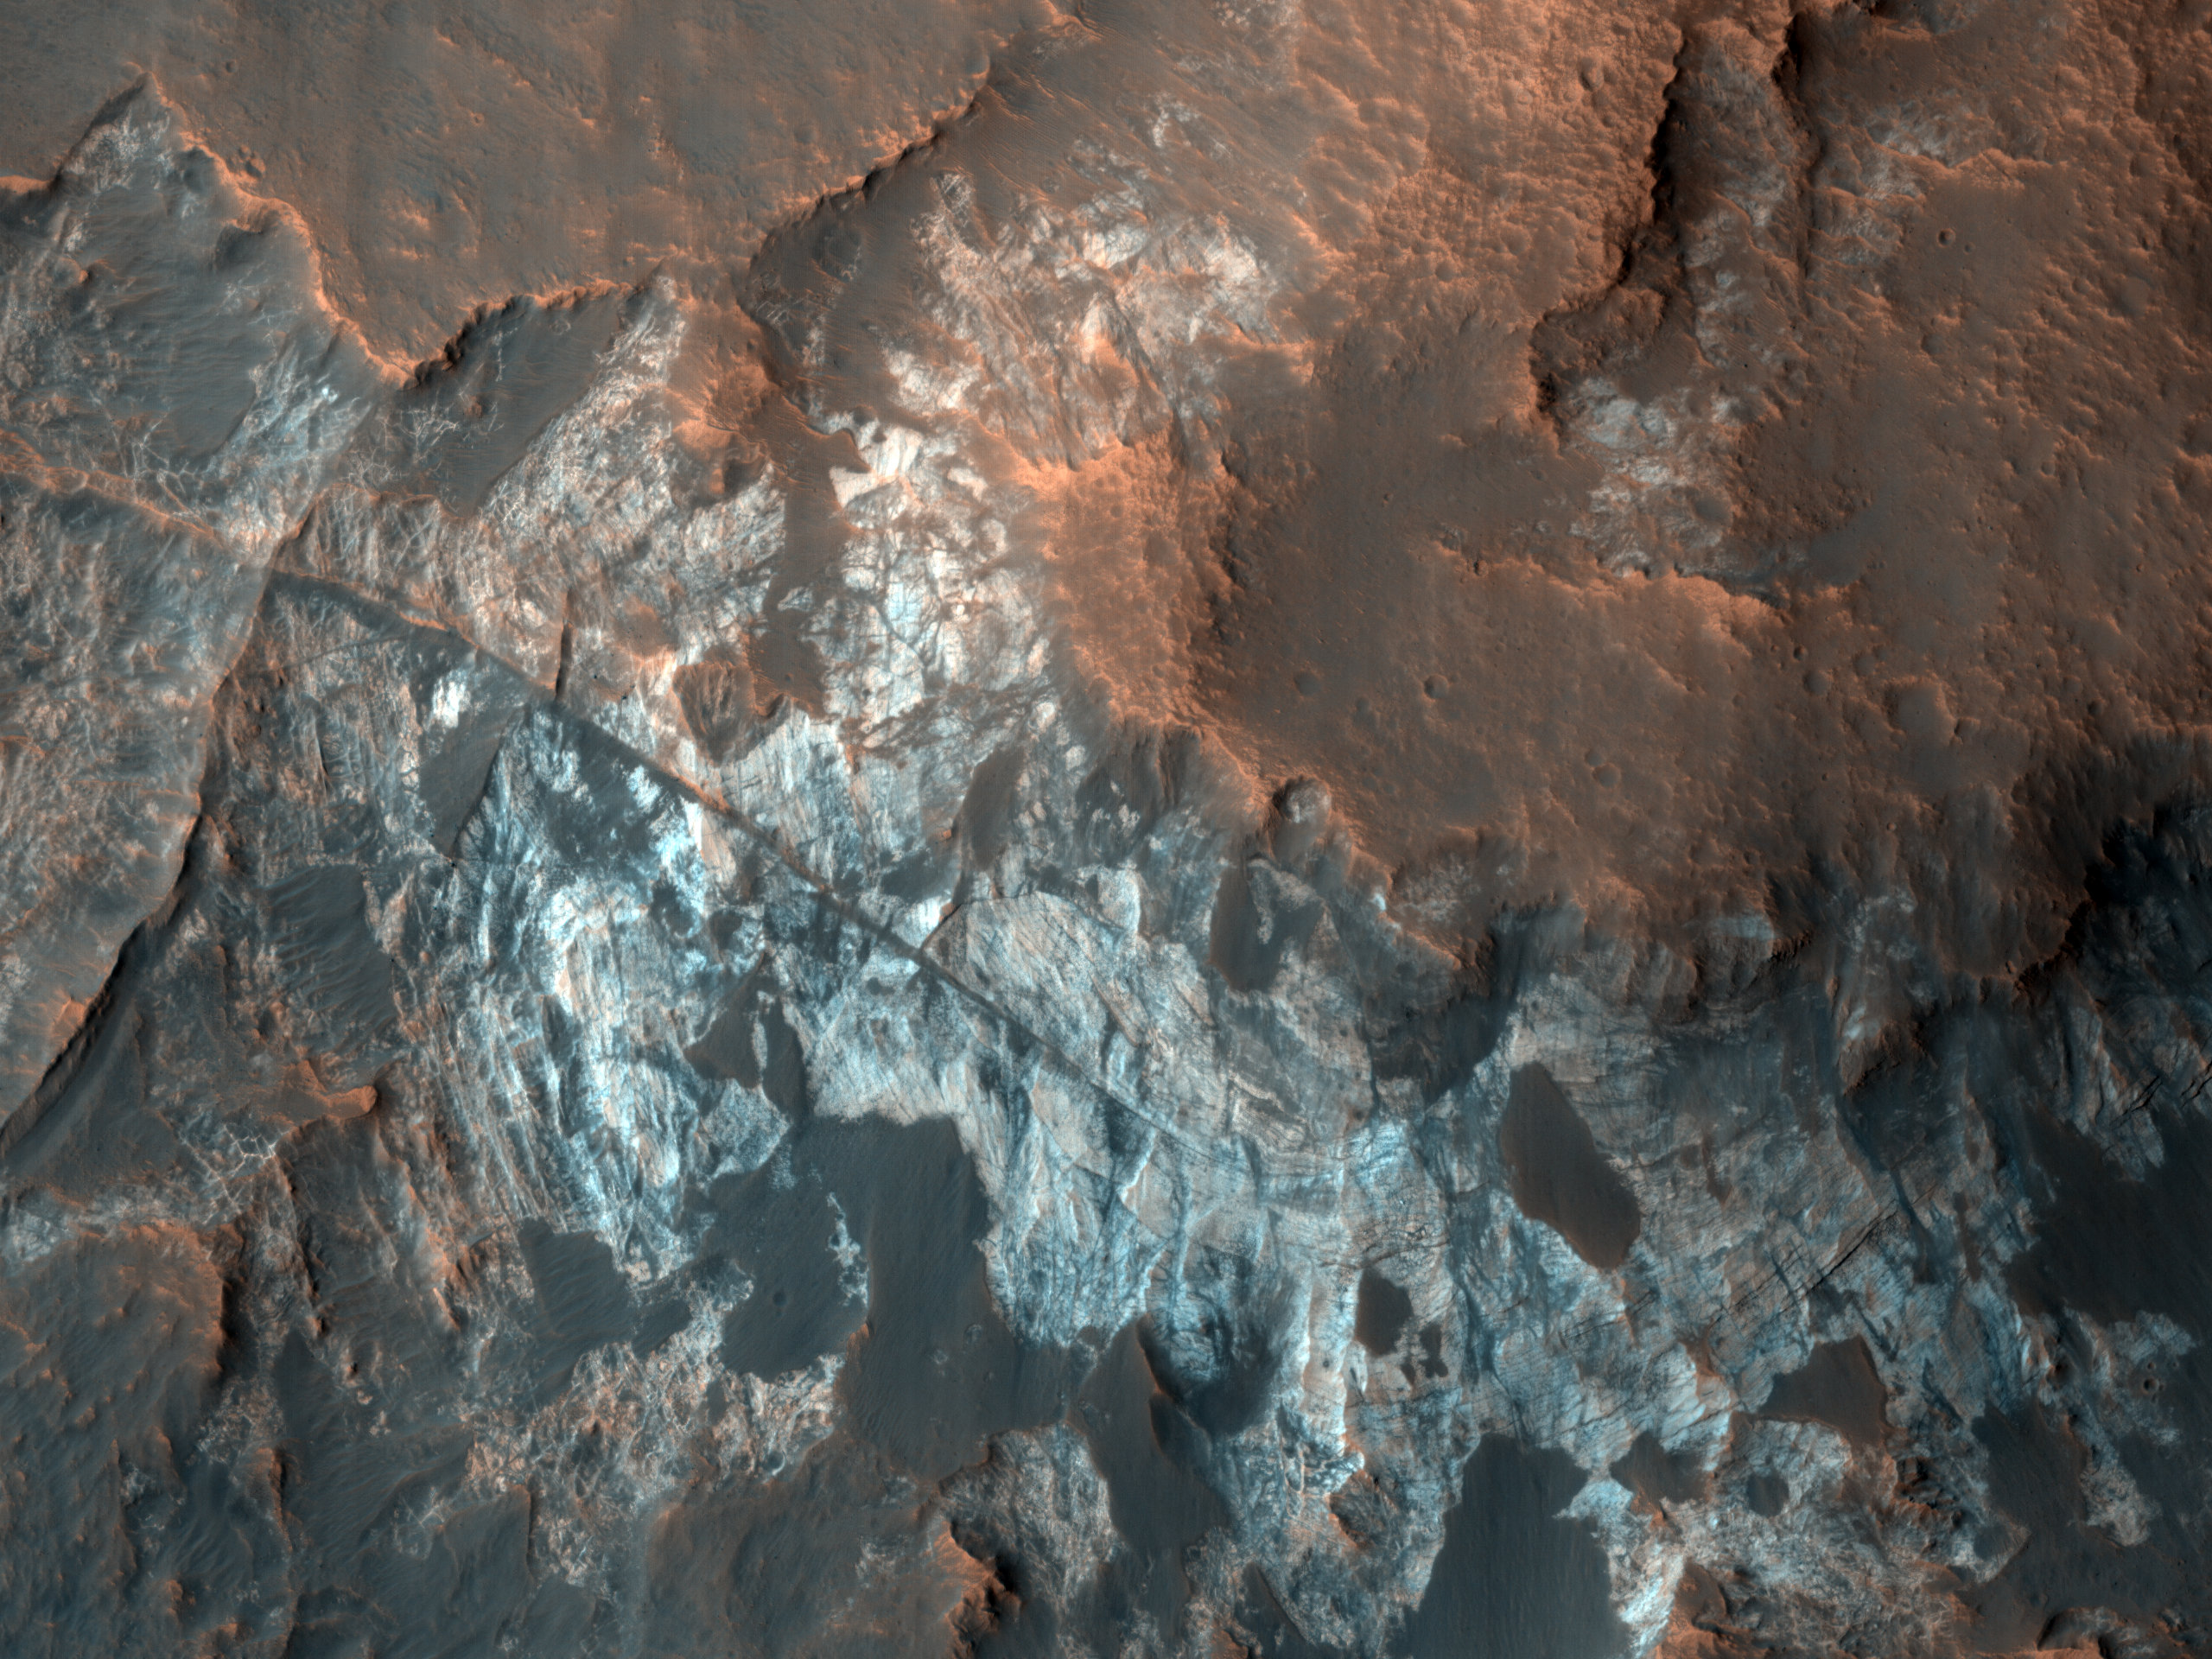 A Layered Butte near Mawrth Vallis